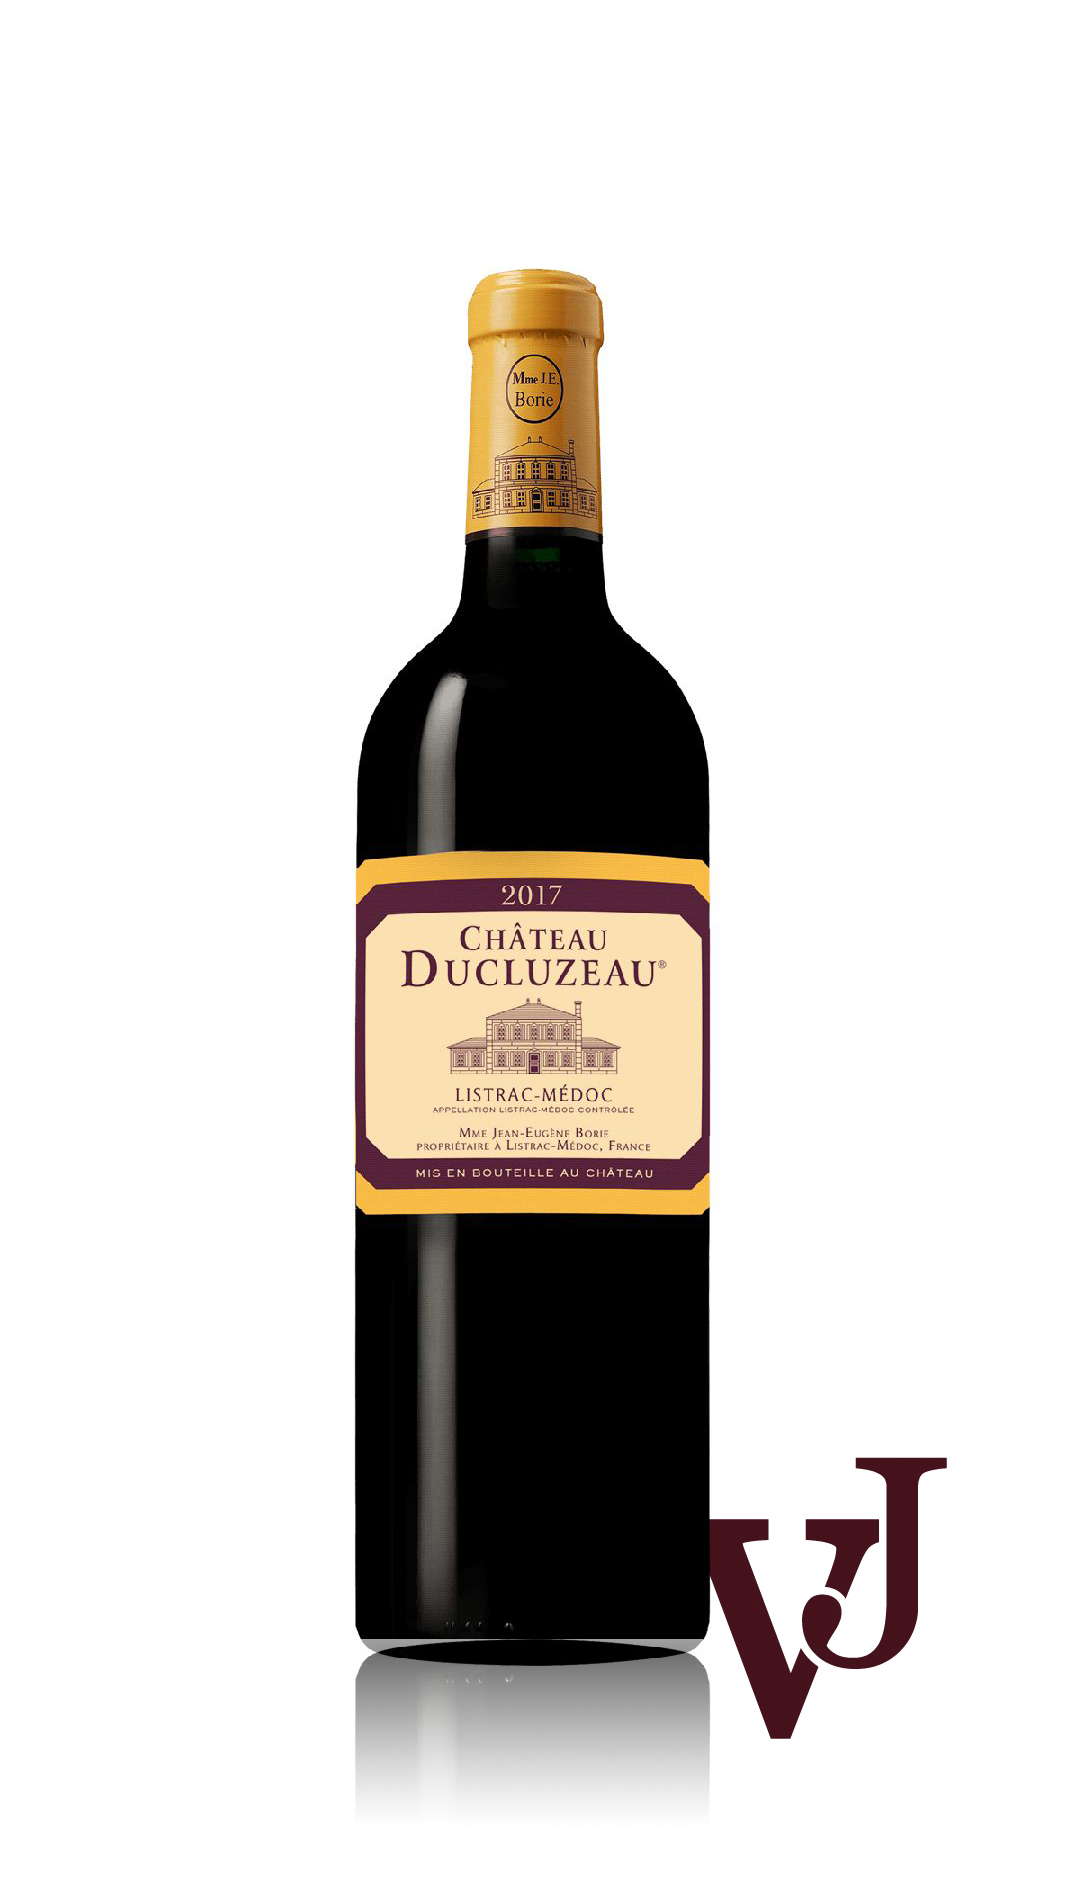 Rött Vin - Château Ducluzeau Les Grands Chais de France 2017 artikel nummer 7261706 från producenten Les Grands Chais de France från området Frankrike